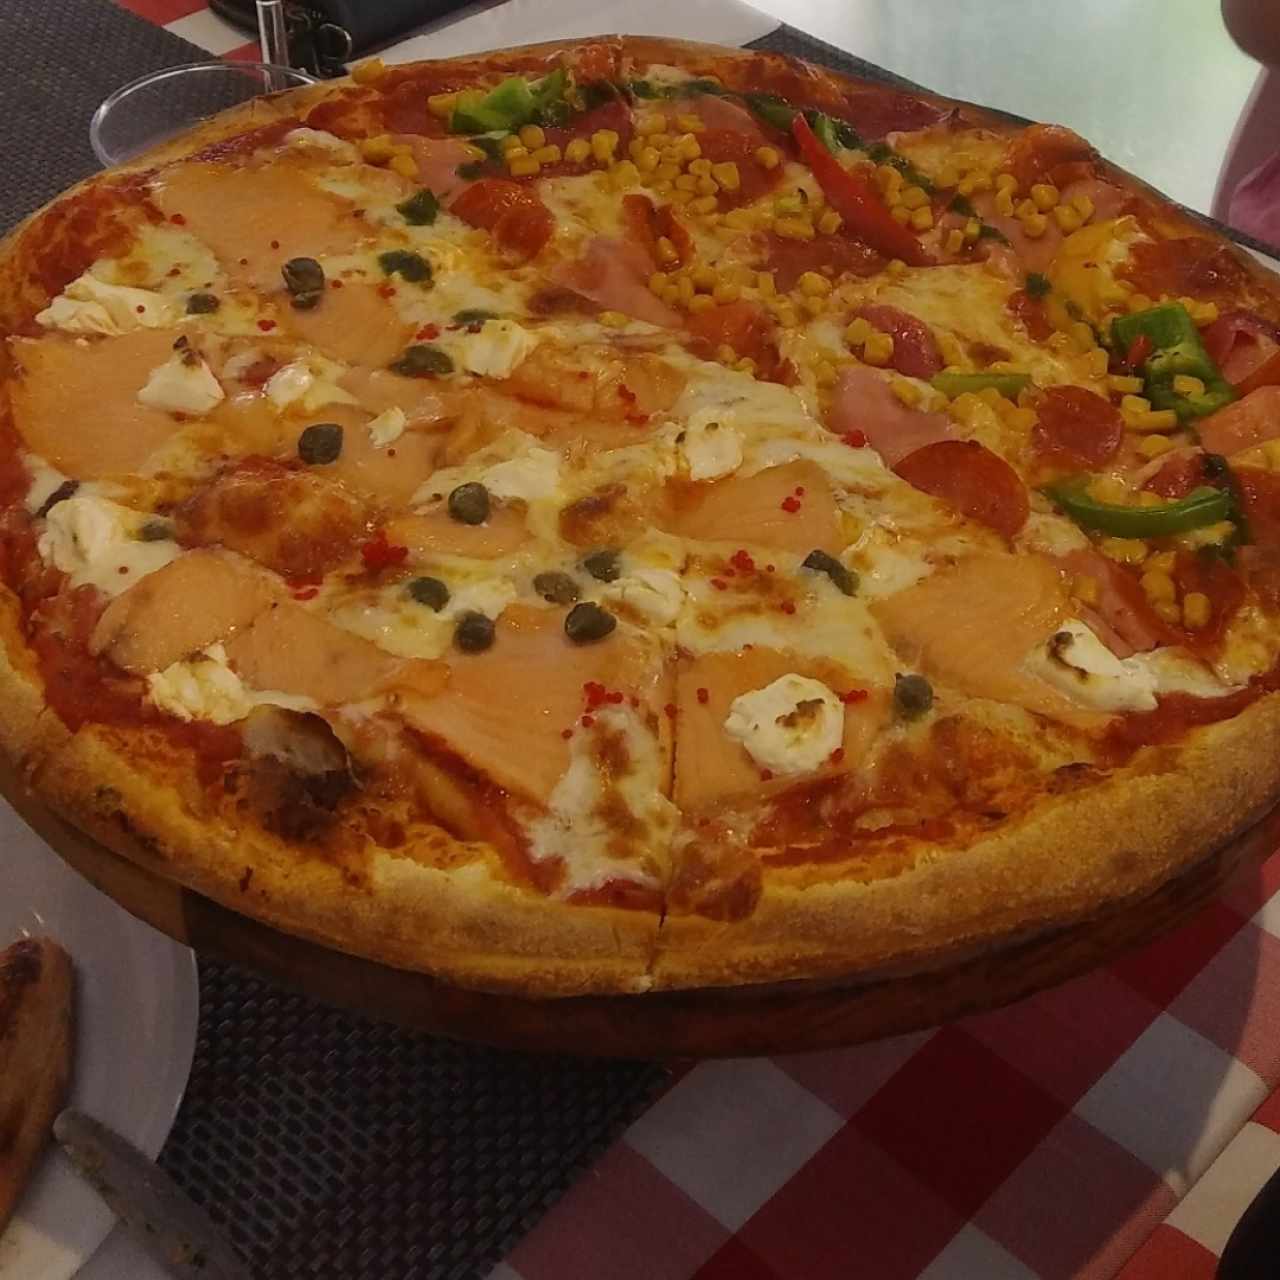 Pizza familiar mitad Salmone, mitad Molisana.